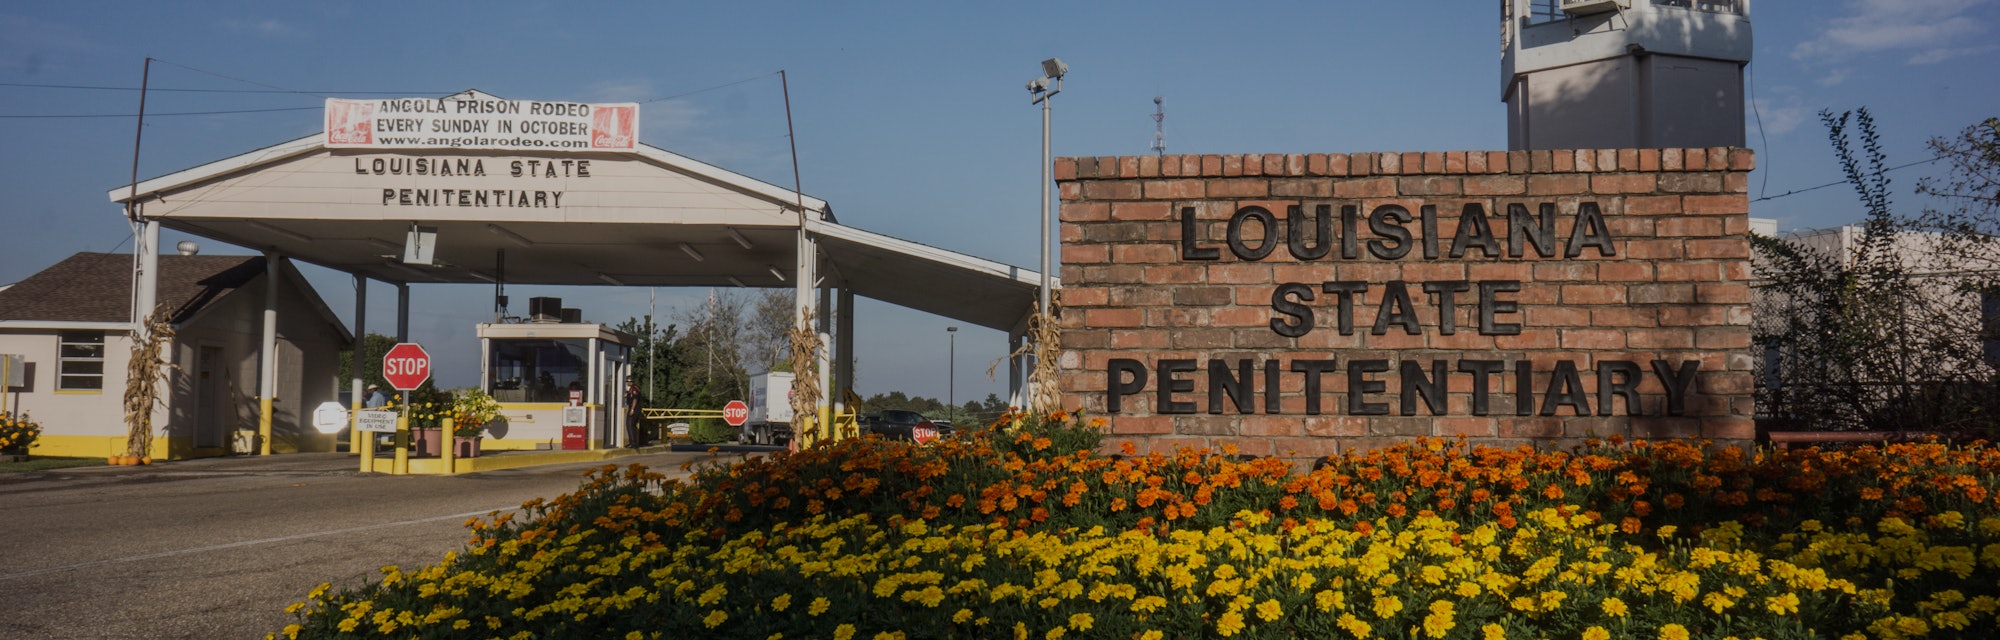 ANGOLA PRISON, LOUISIANA - OCTOBER 14, 2013:  
The entrance of Angola Prison, Louisiana. 
The Louisi...